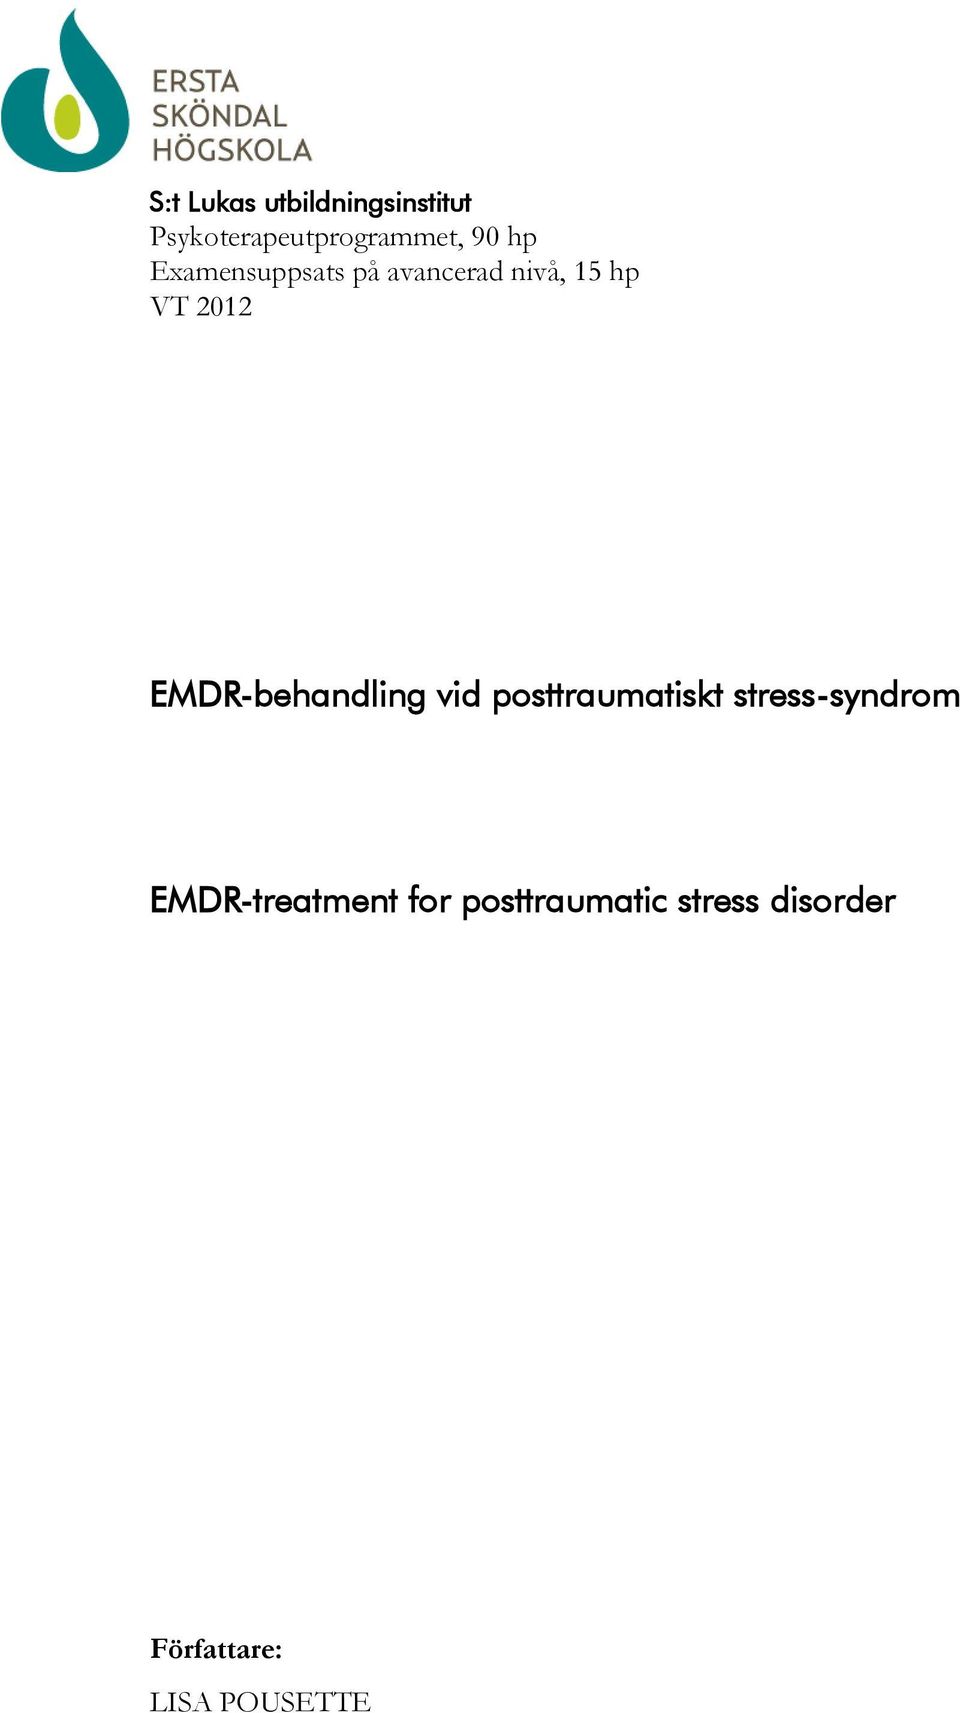 EMDR-behandling vid posttraumatiskt stress-syndrom